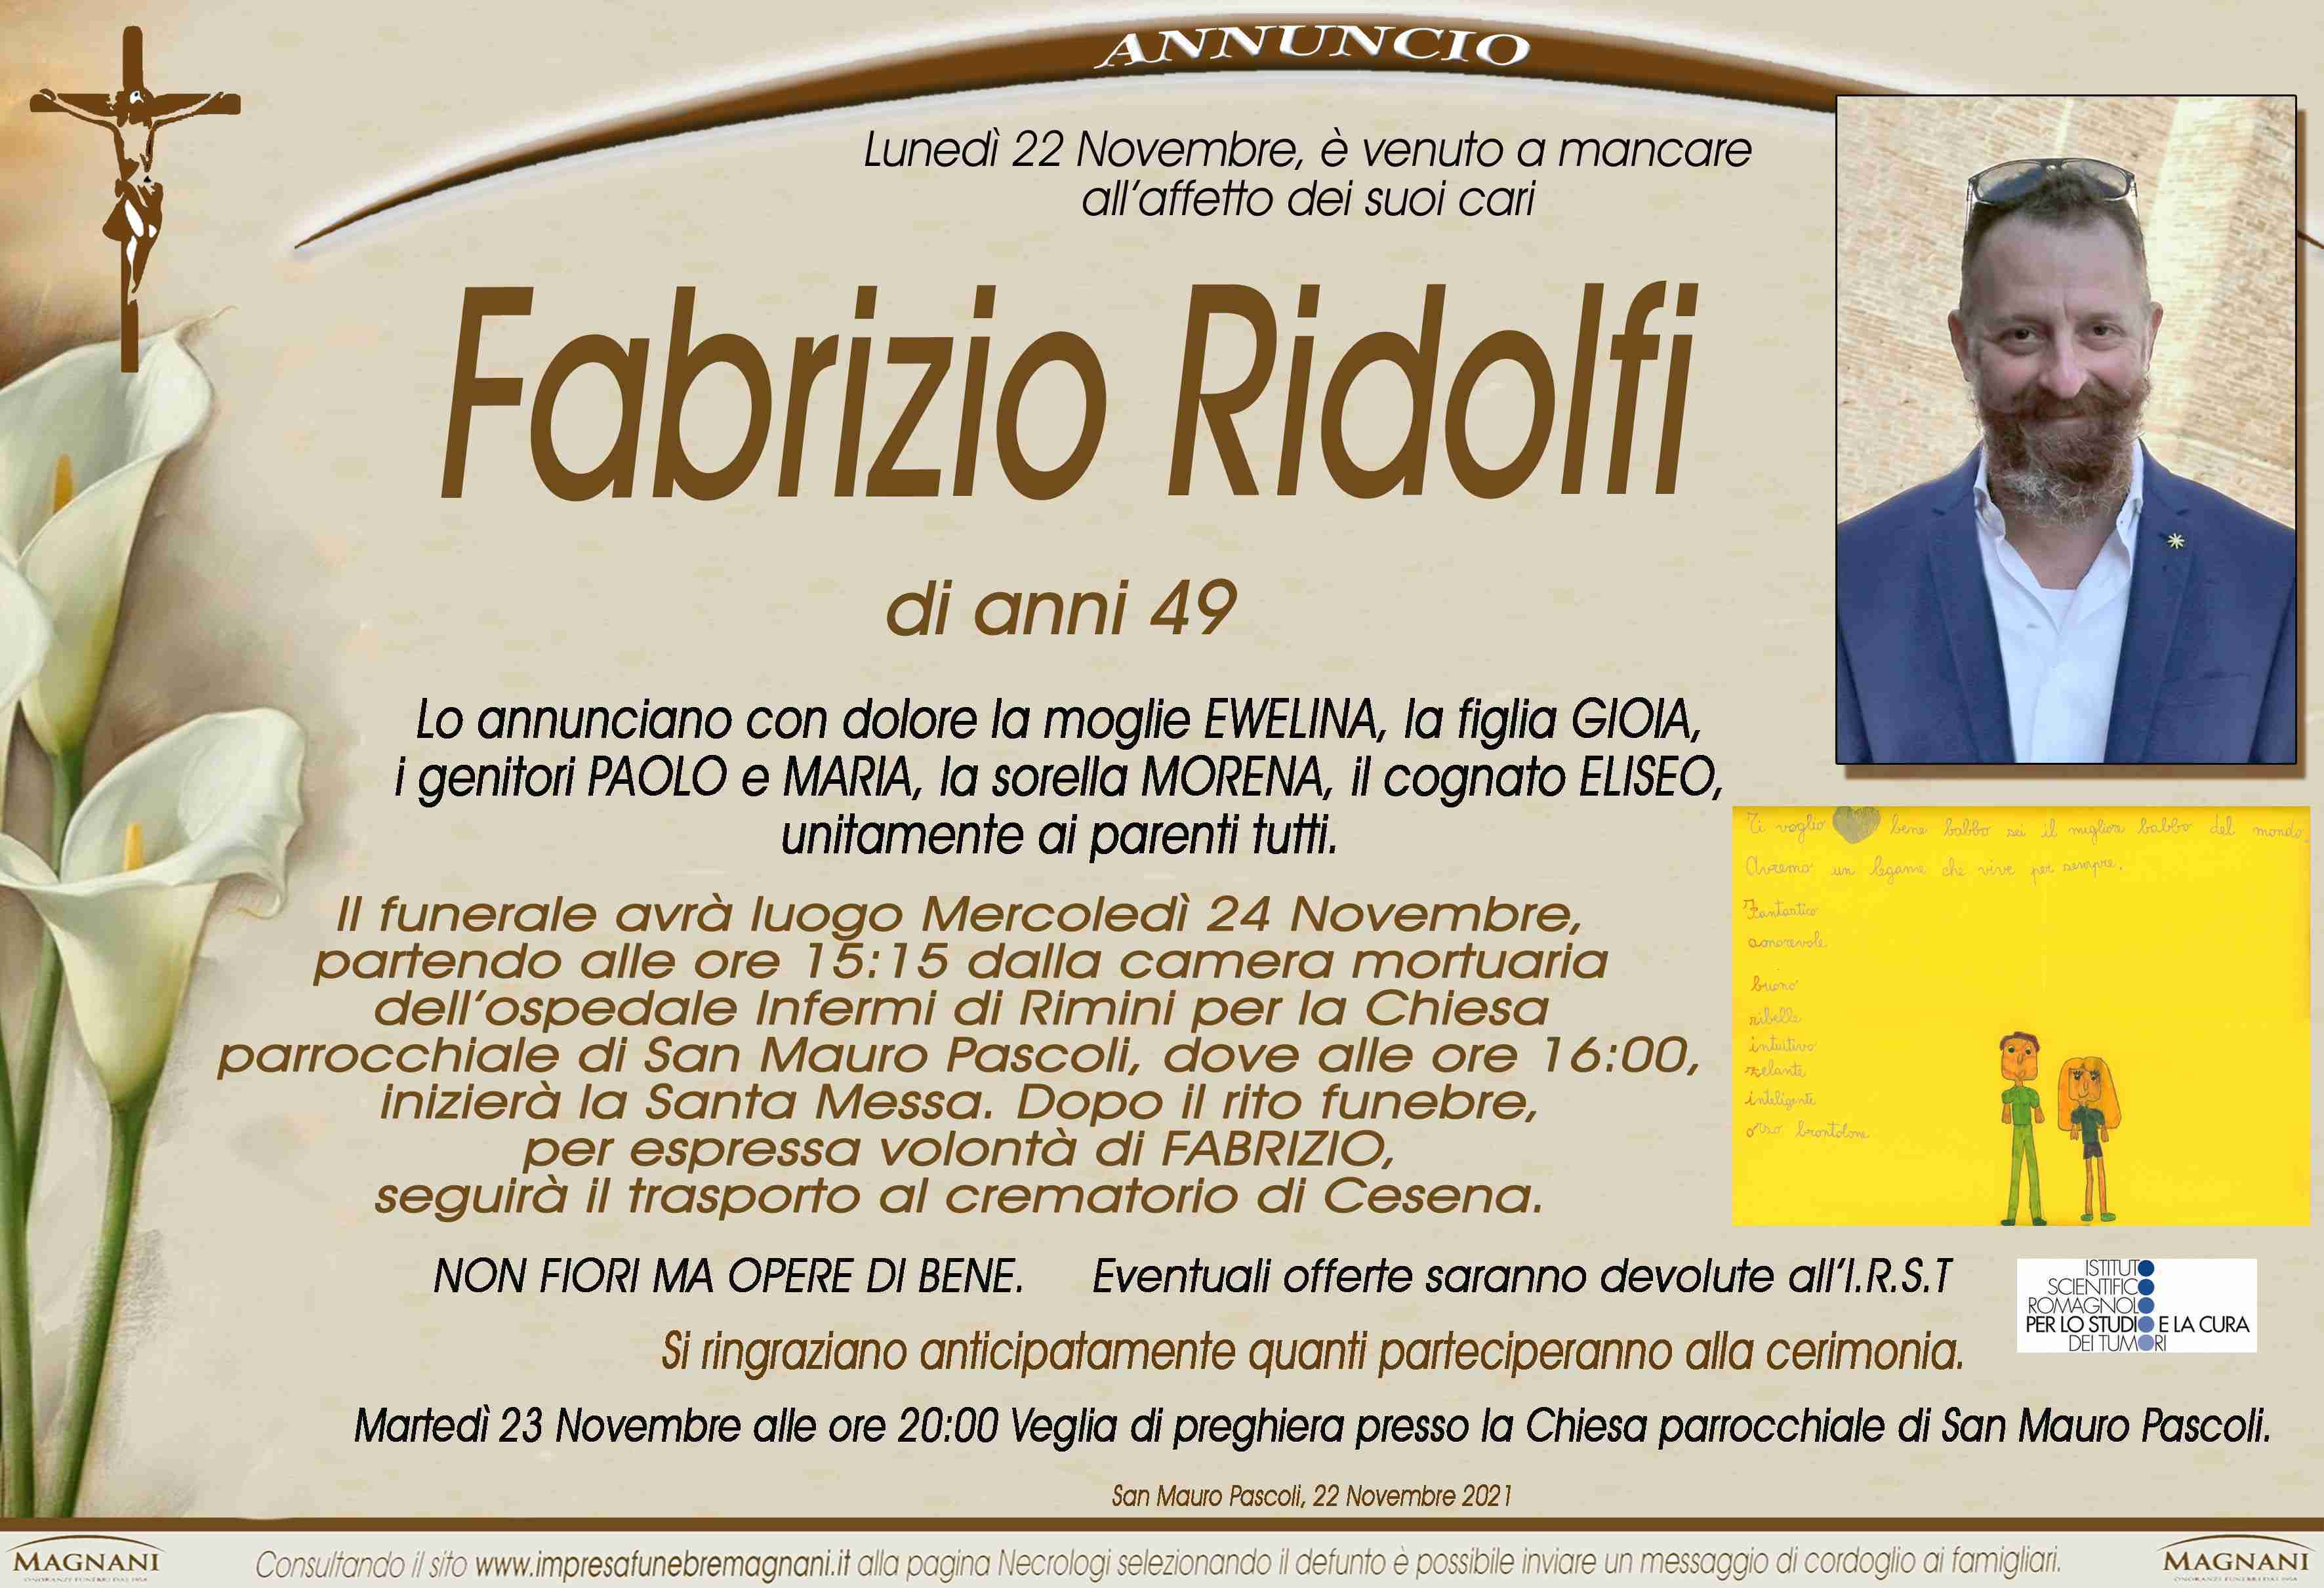 Fabrizio Ridolfi